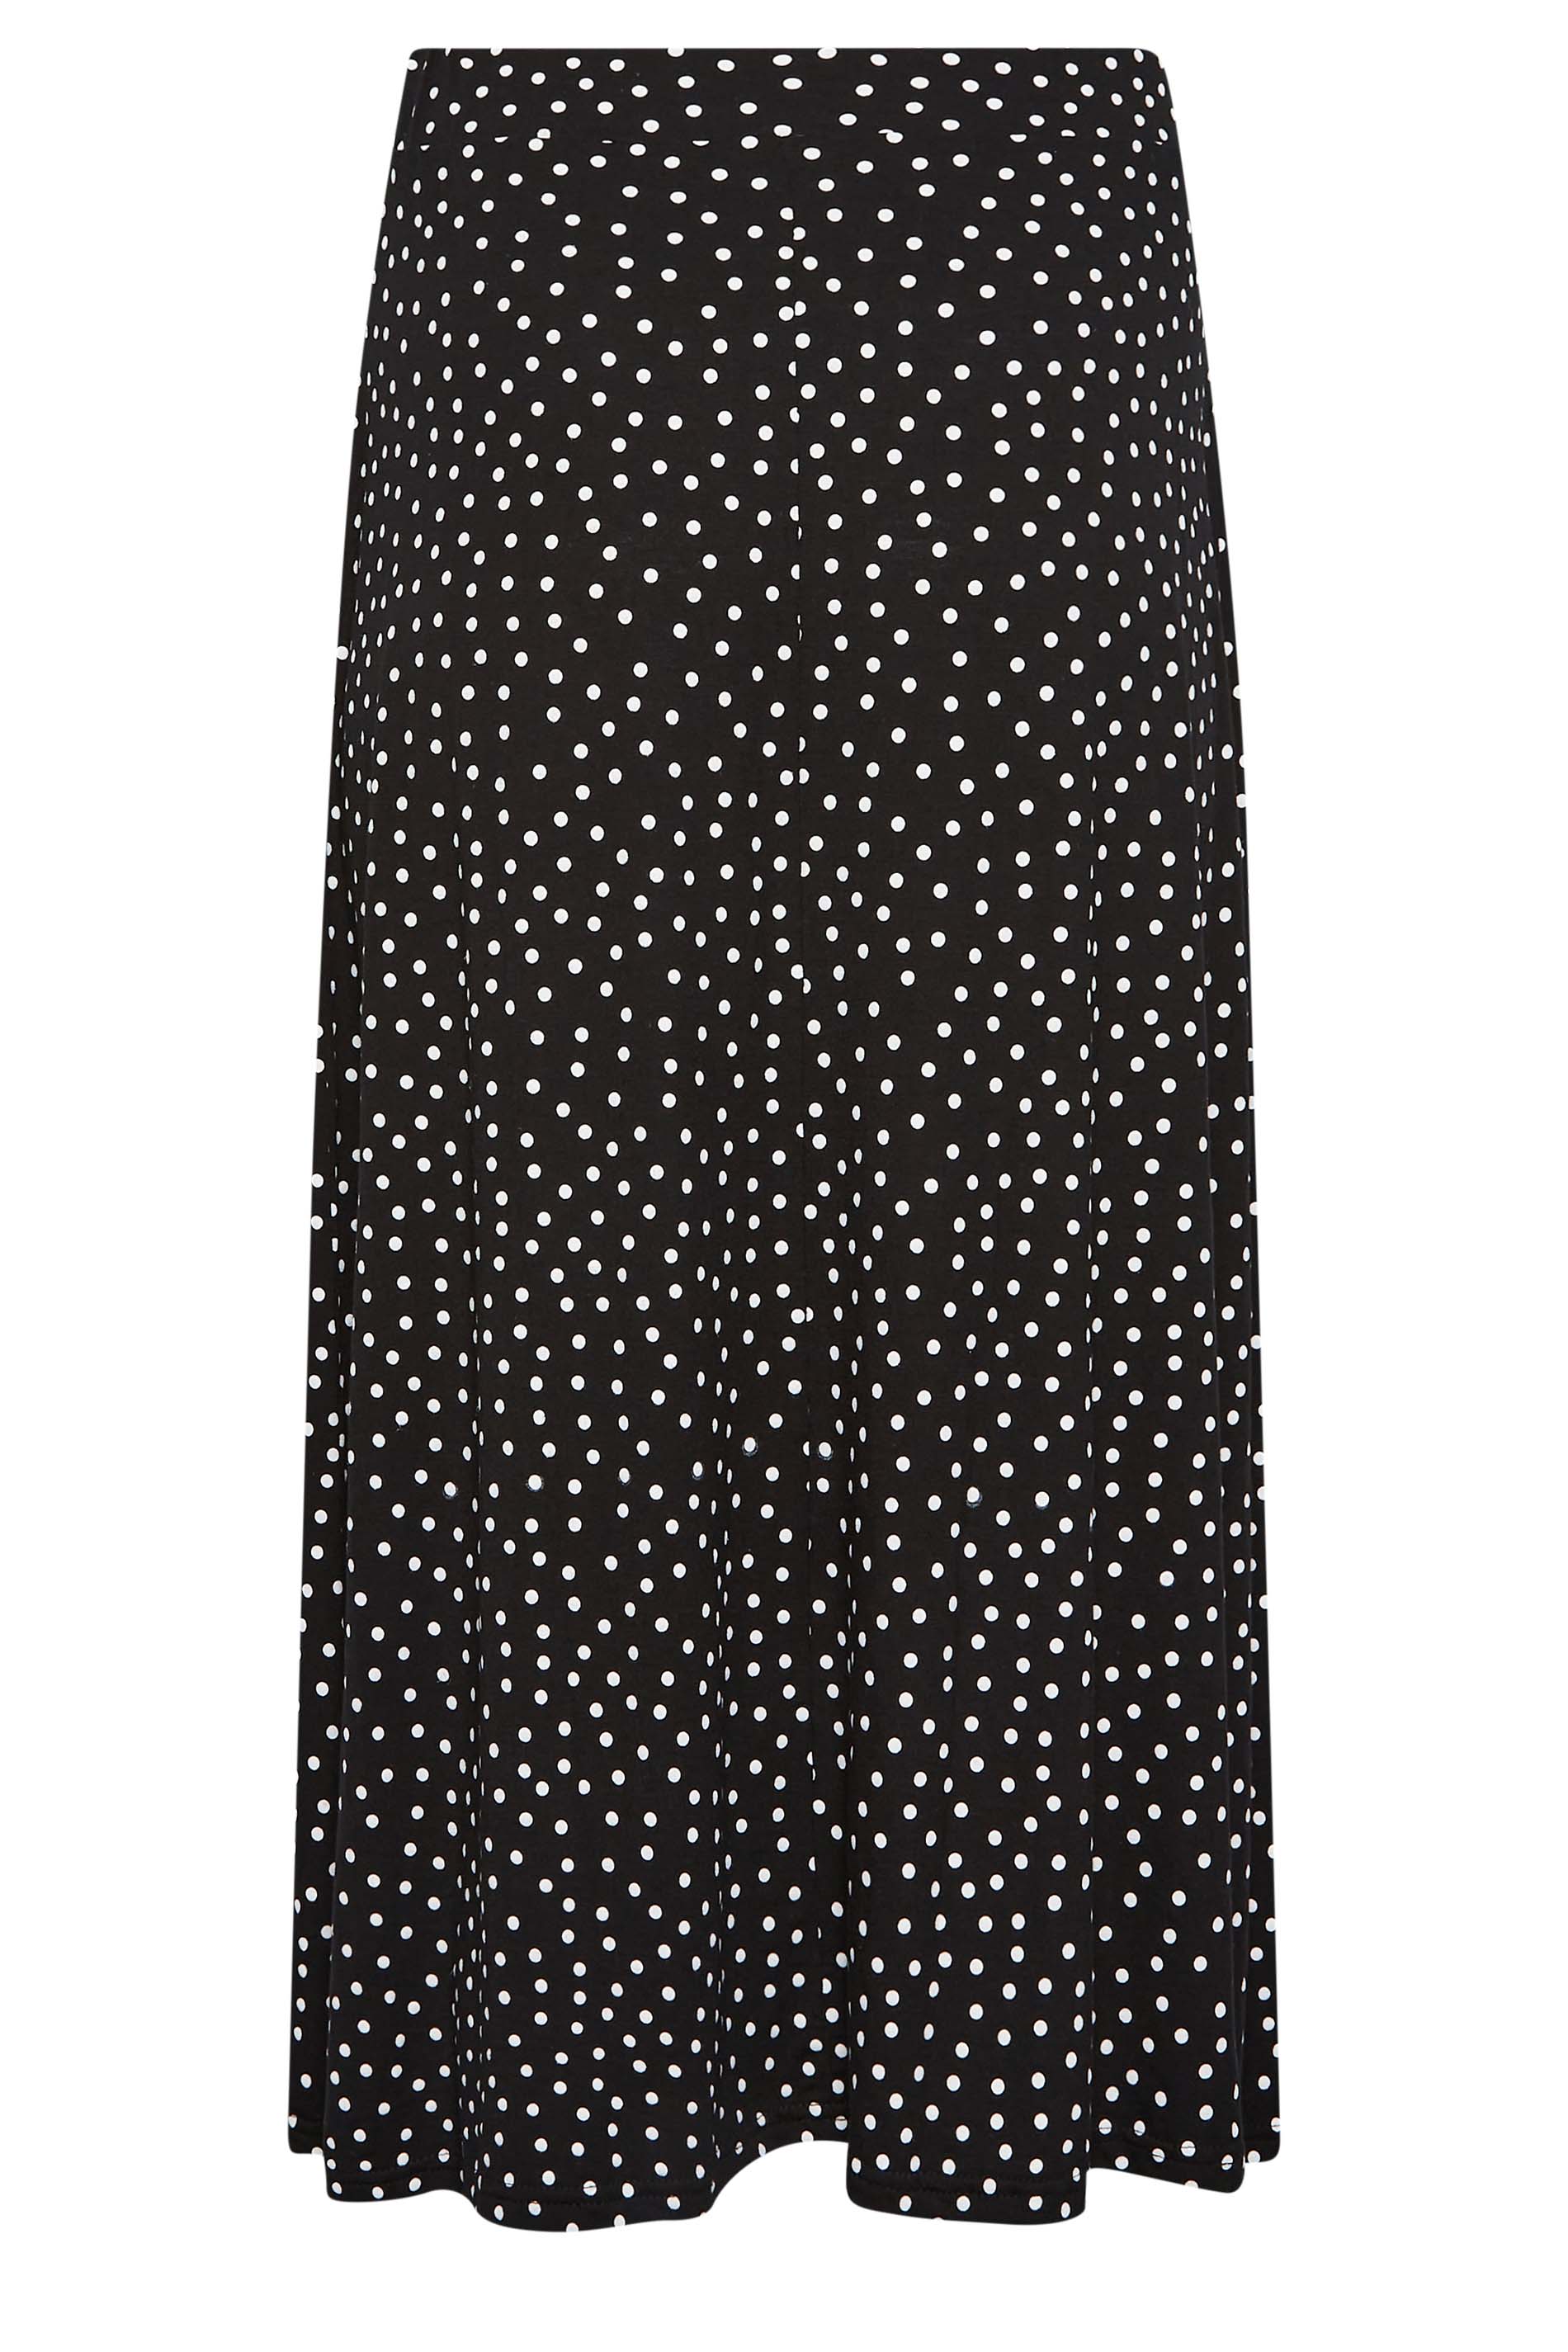 M&Co Black Polka Dot Print Jersey Midi Skirt | M&Co